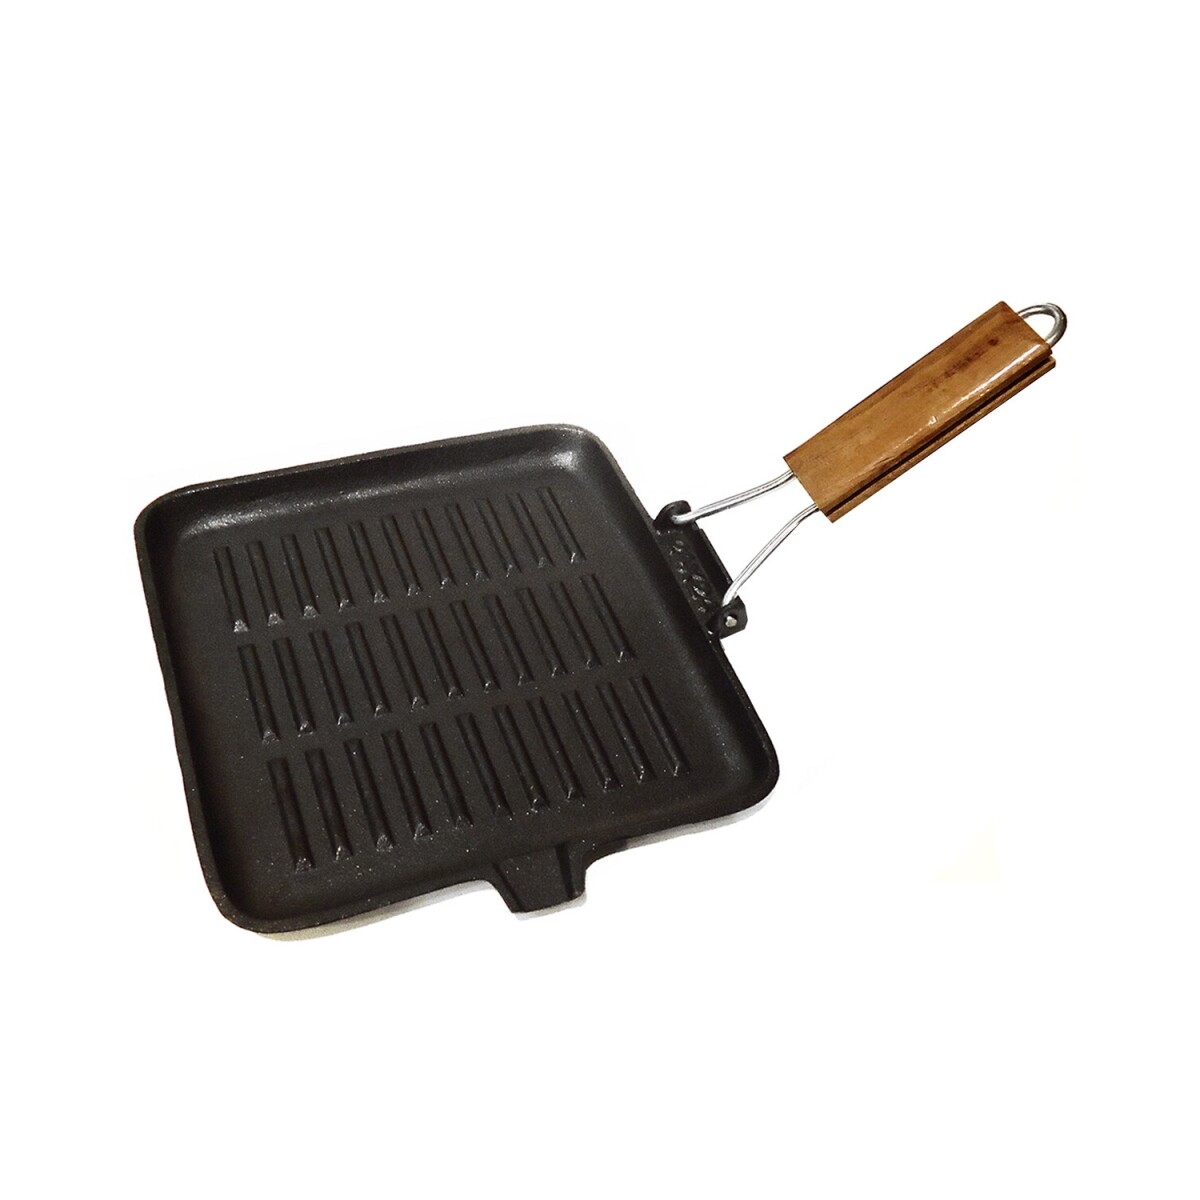 Plancha grill de hierro de 24x24cm Selecta - Negro 